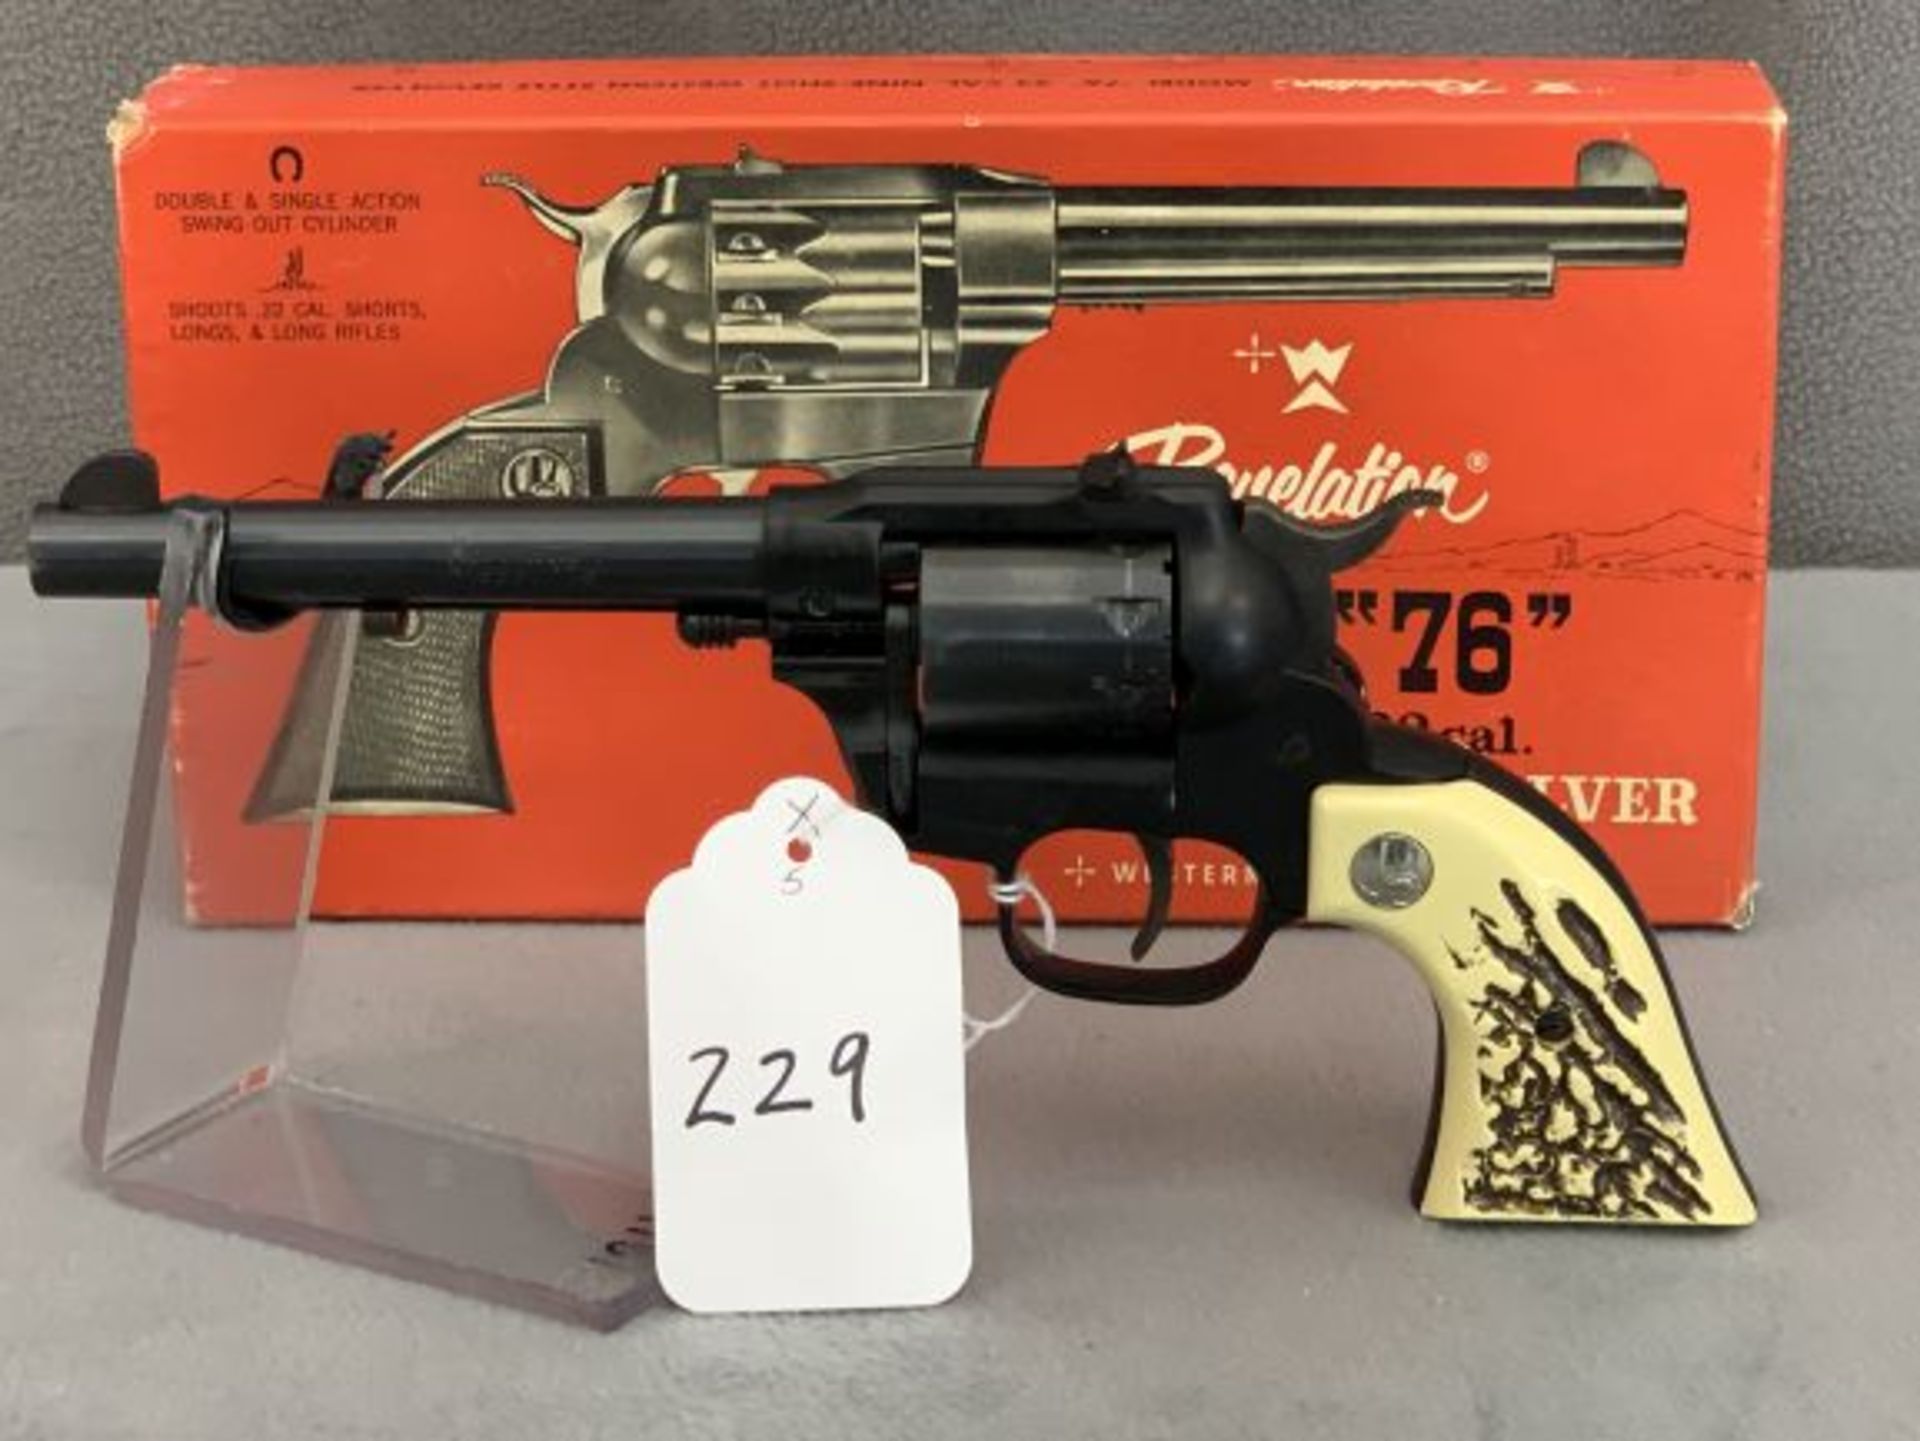 229. Revelation Mod. 76, .22LR Revolver w/ Orig Box, SN: 2268961